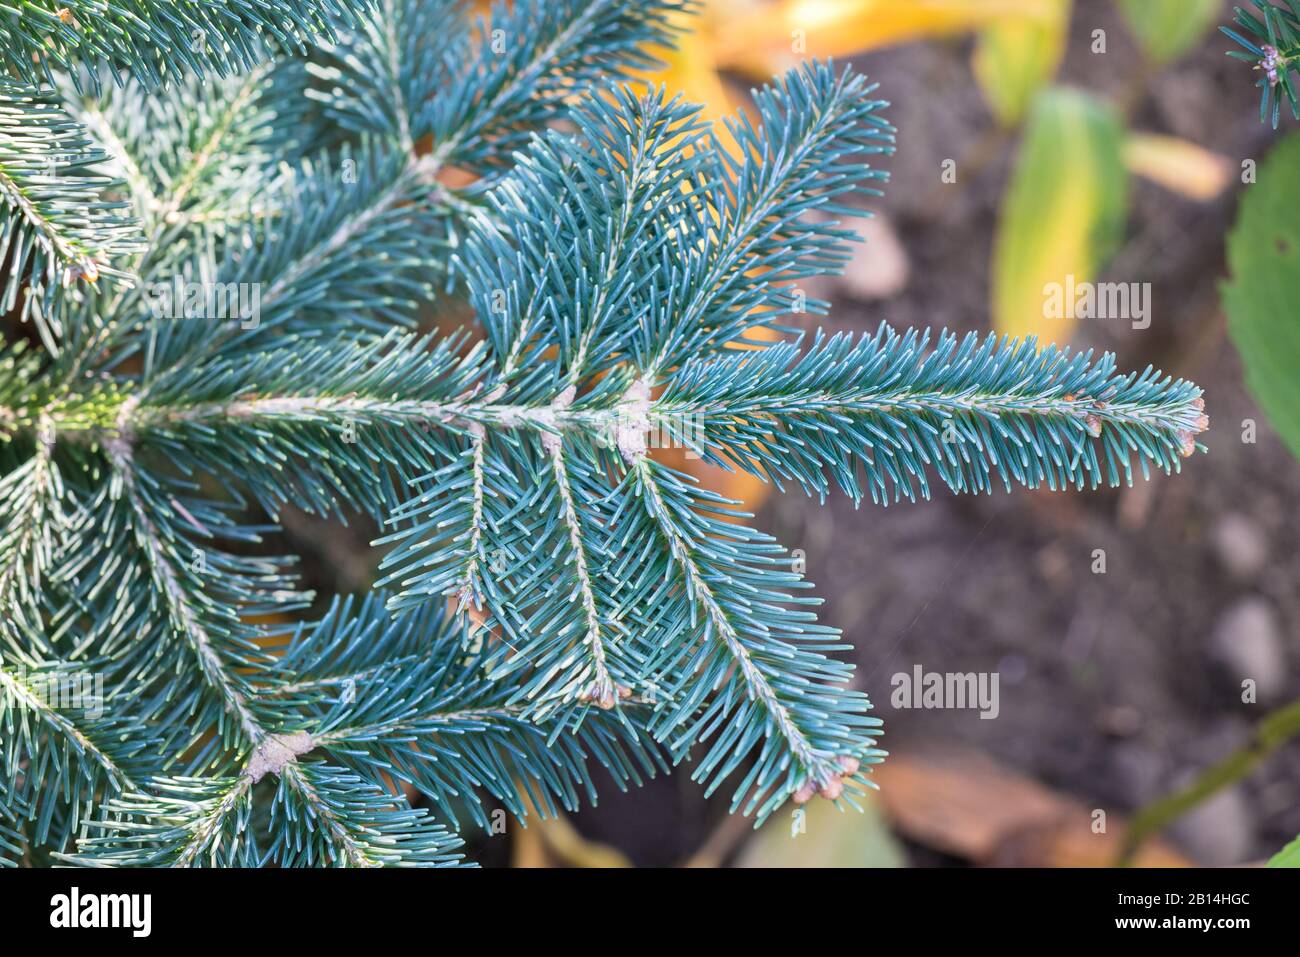 Twigs of Abies lasiocarpa var. arizonica (corkbark fir). Beautiful green to blue soft needles. Stock Photo